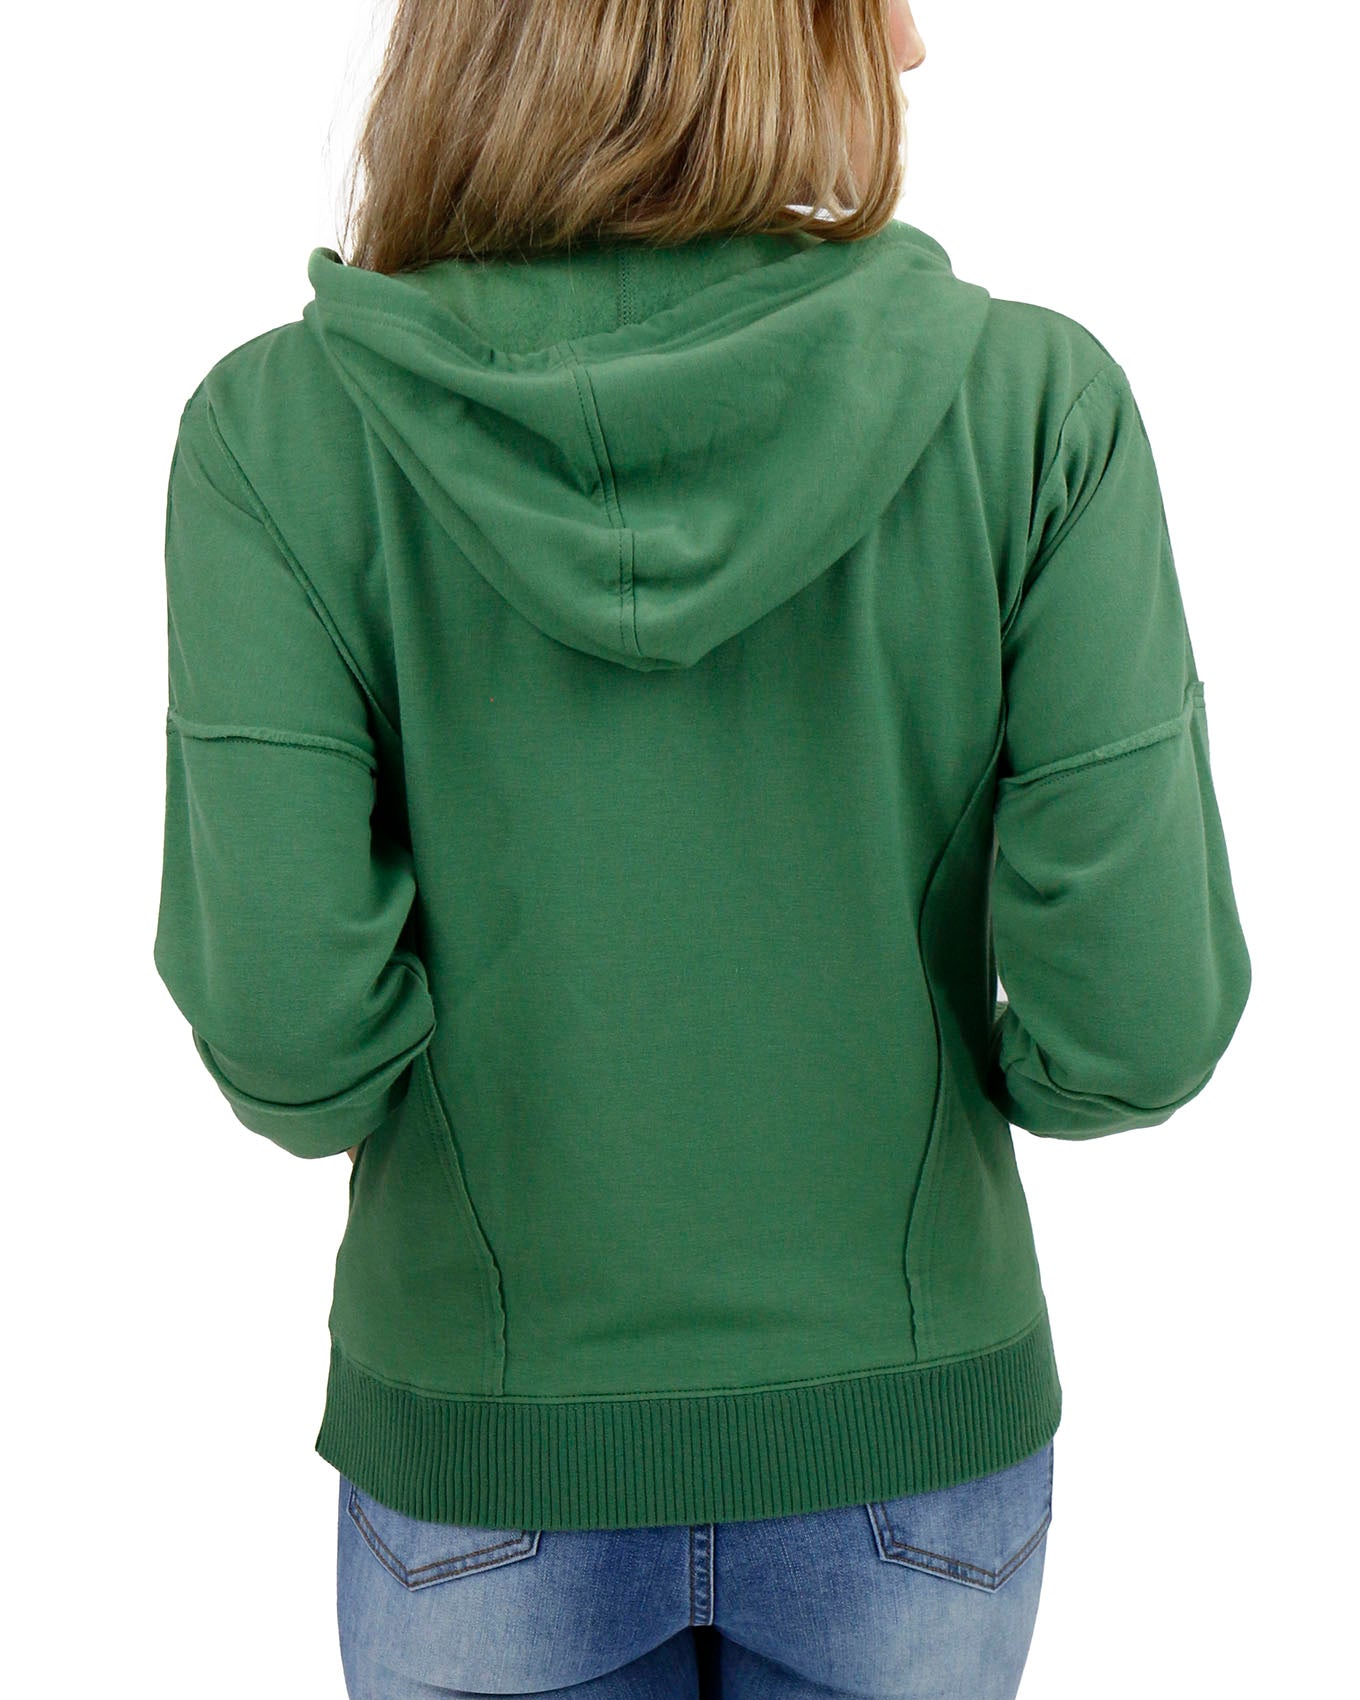 back view stock shot of hedge green zip up hoodie